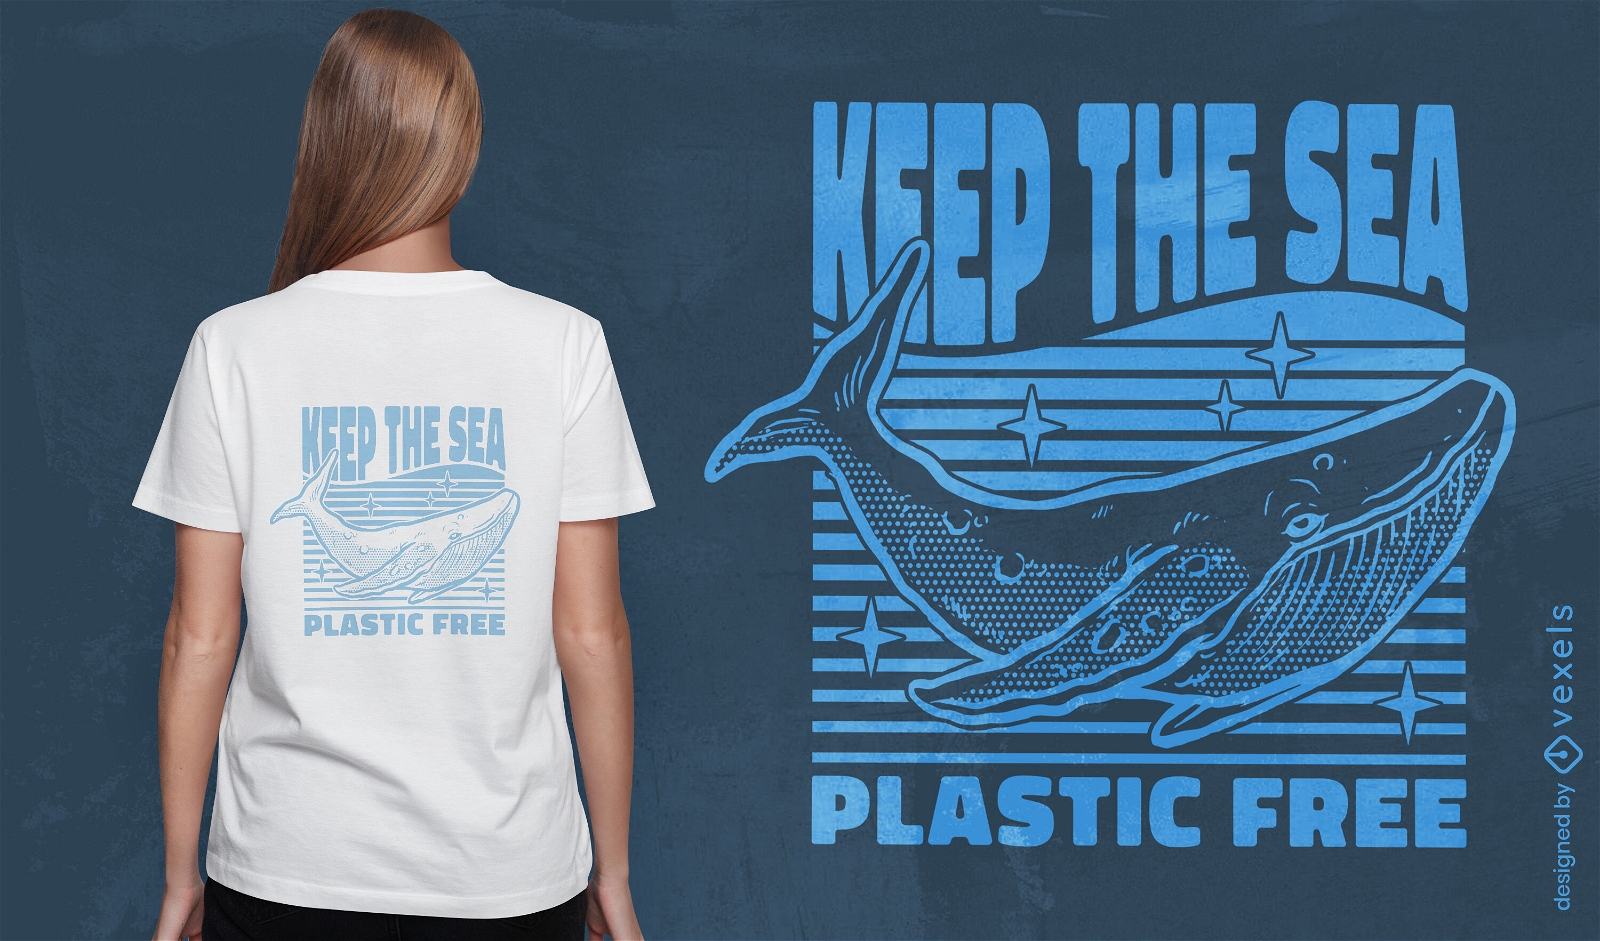 Keep the sea plastic free whale t-shirt design